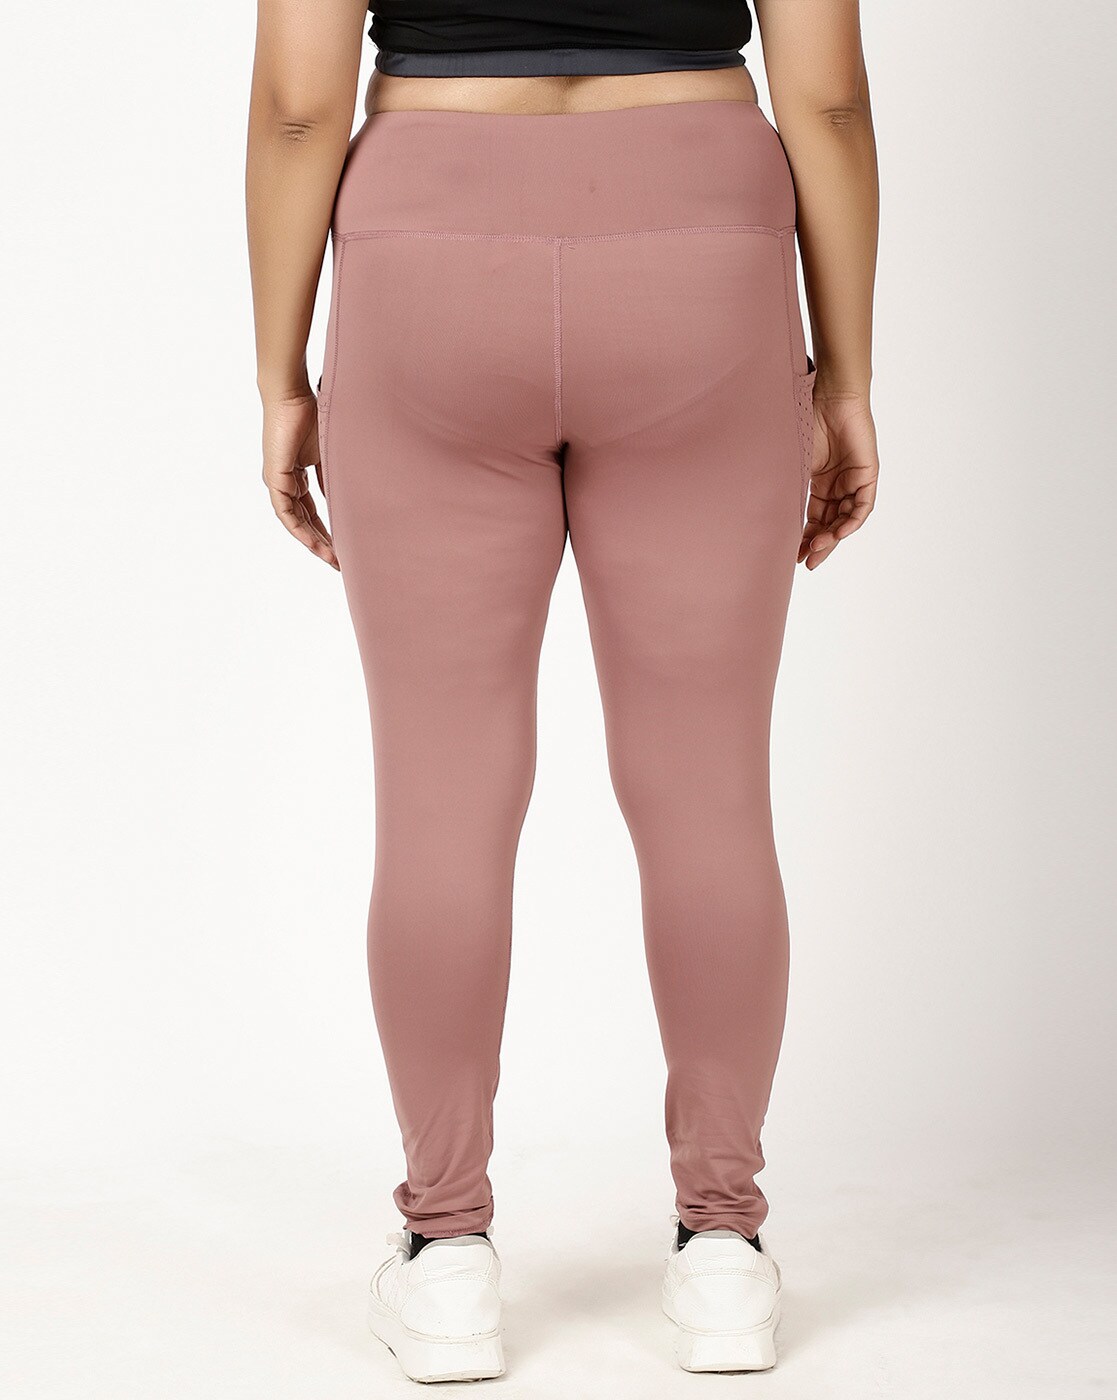 Buy Pink Leggings for Women by Studioactiv Online